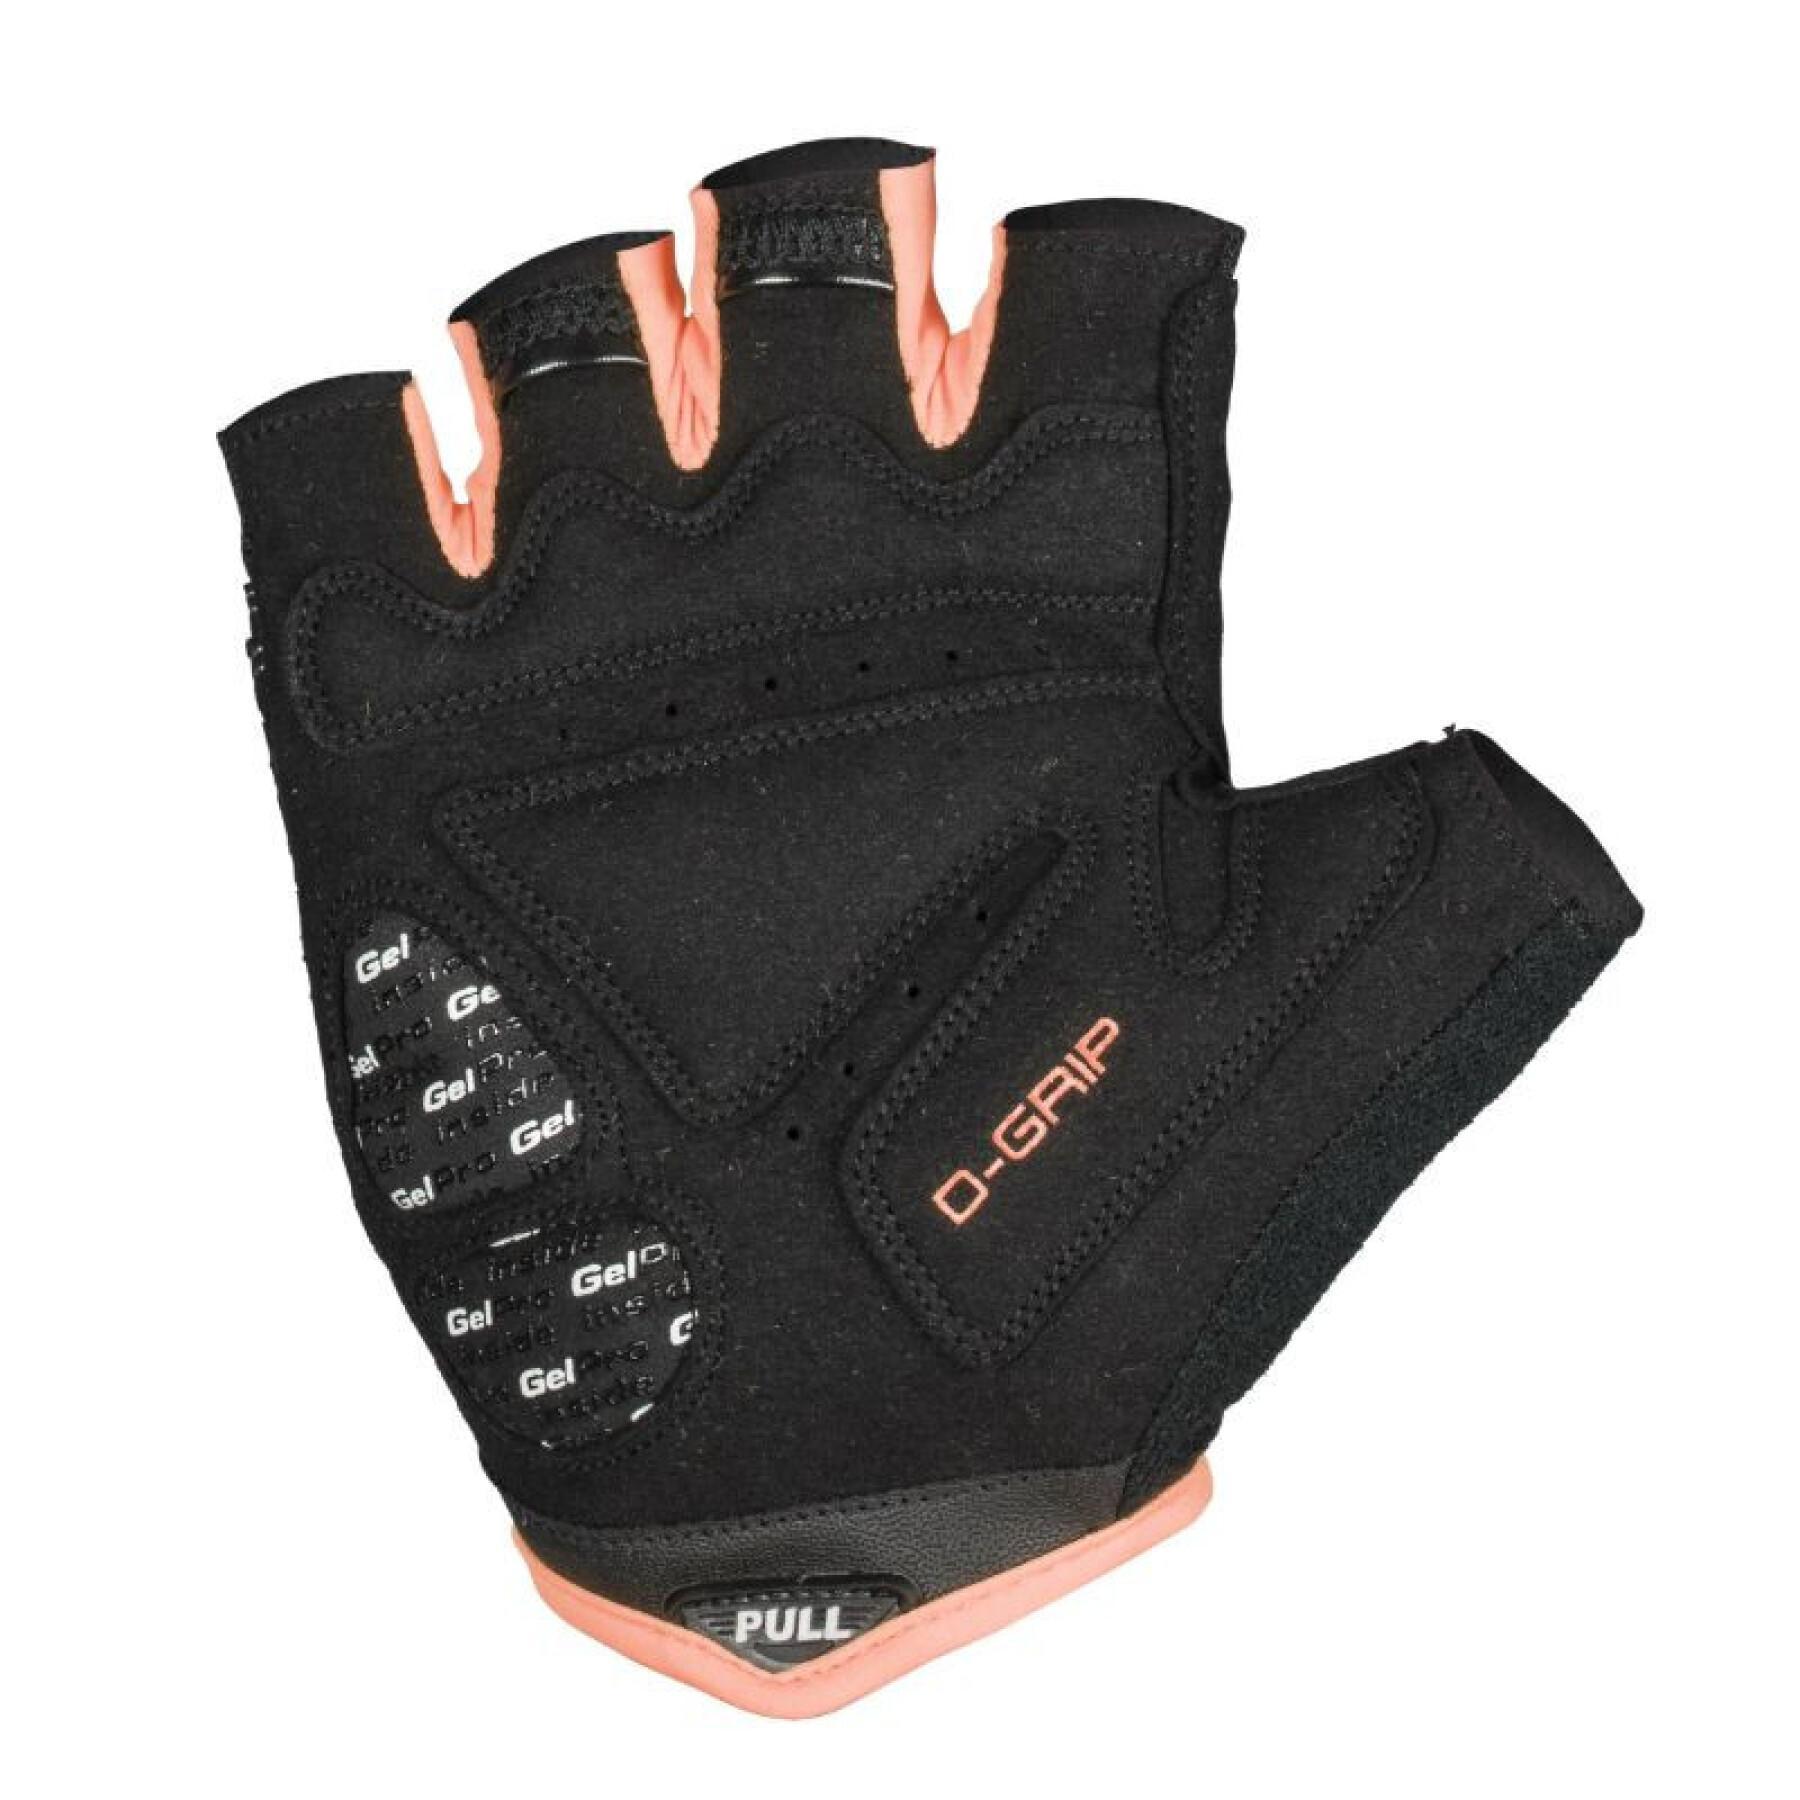 Kurze Handschuhe mit Klettverschluss Gist D-Grip Gel ete -5511